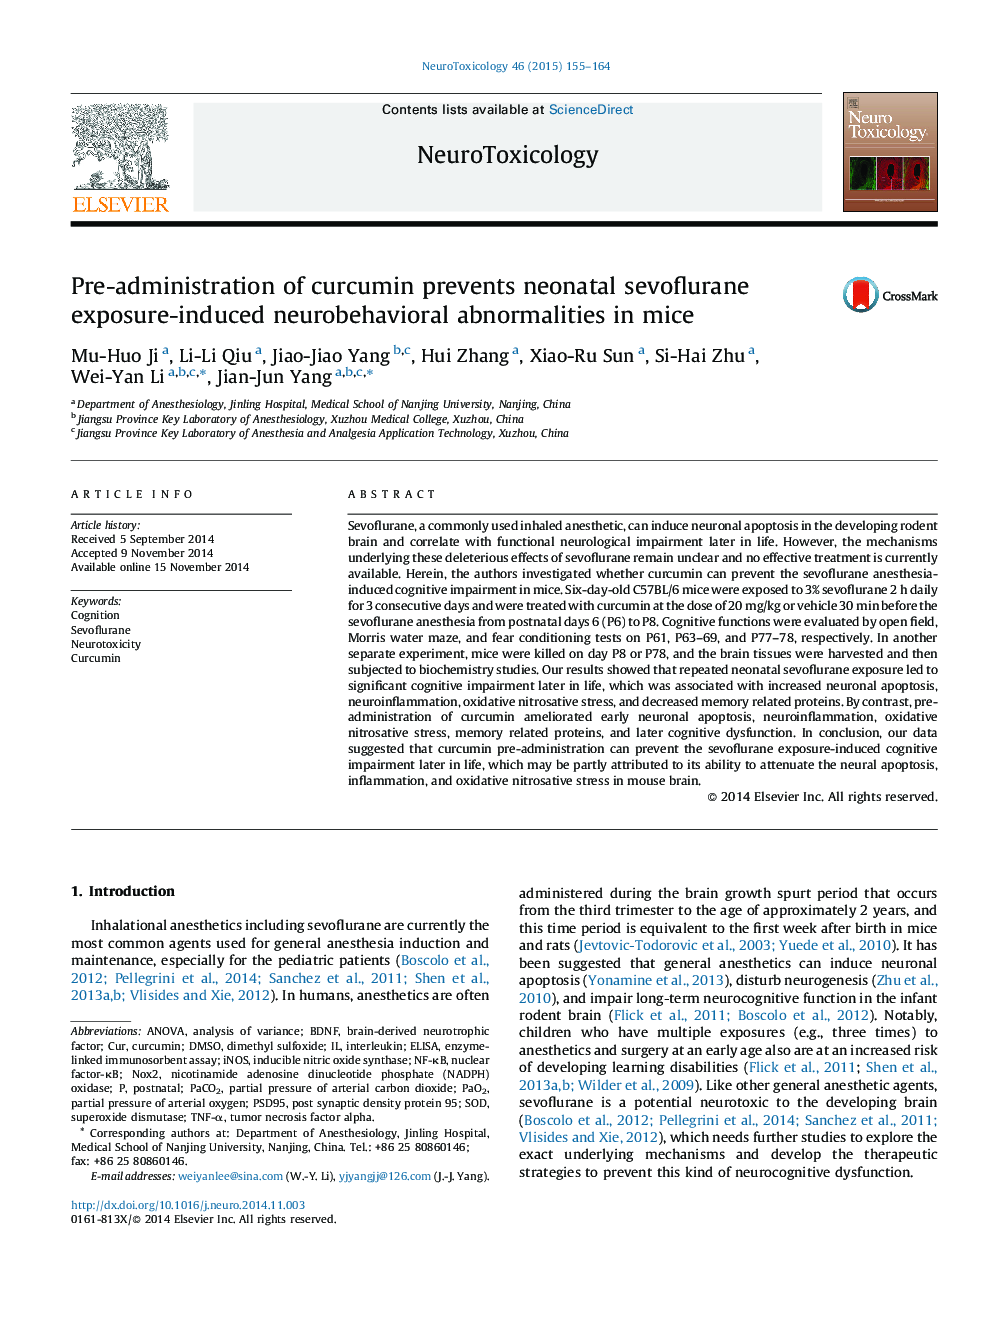 Pre-administration of curcumin prevents neonatal sevoflurane exposure-induced neurobehavioral abnormalities in mice